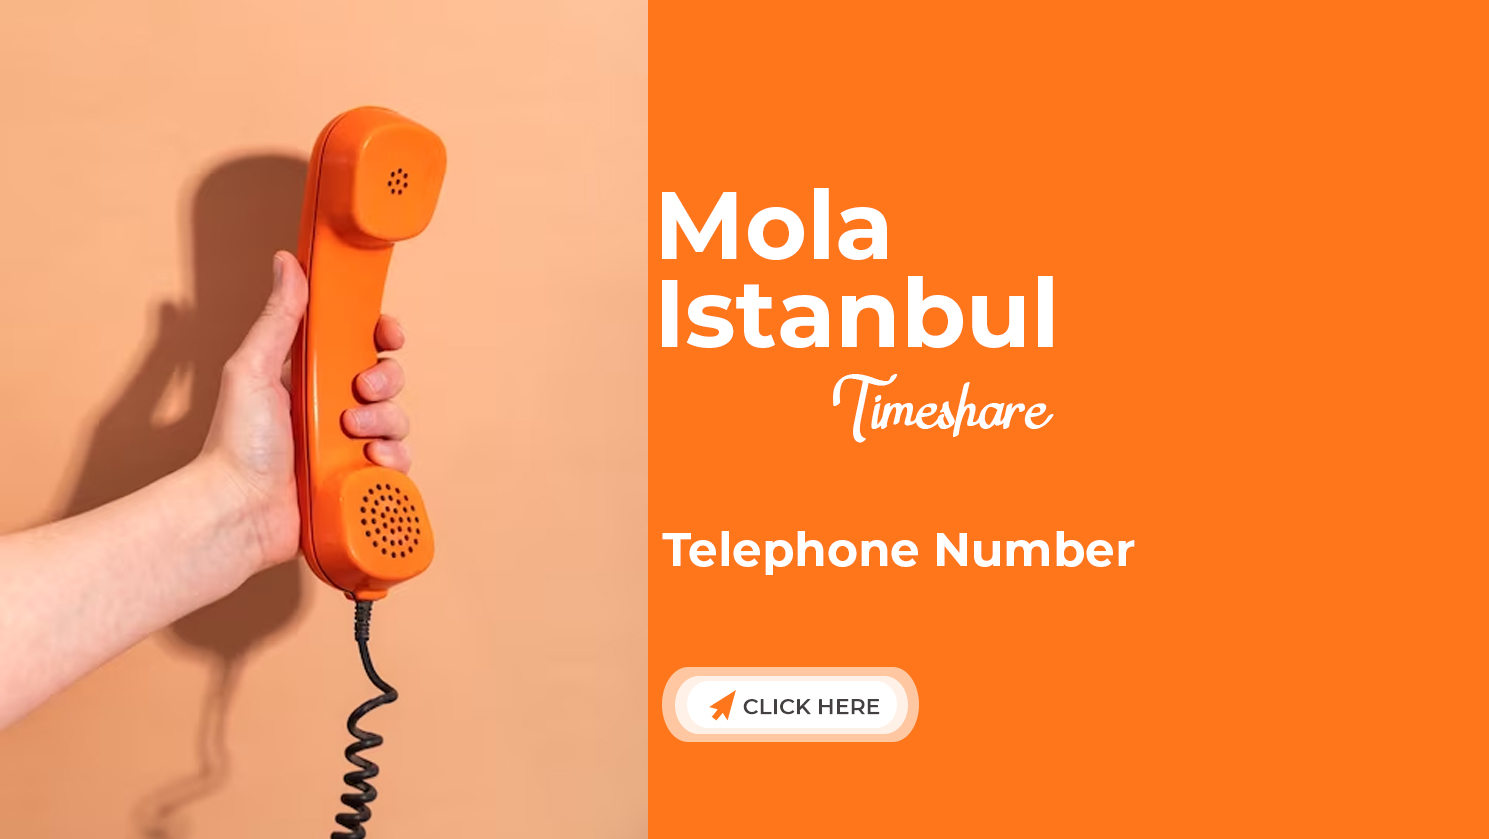 telephone number